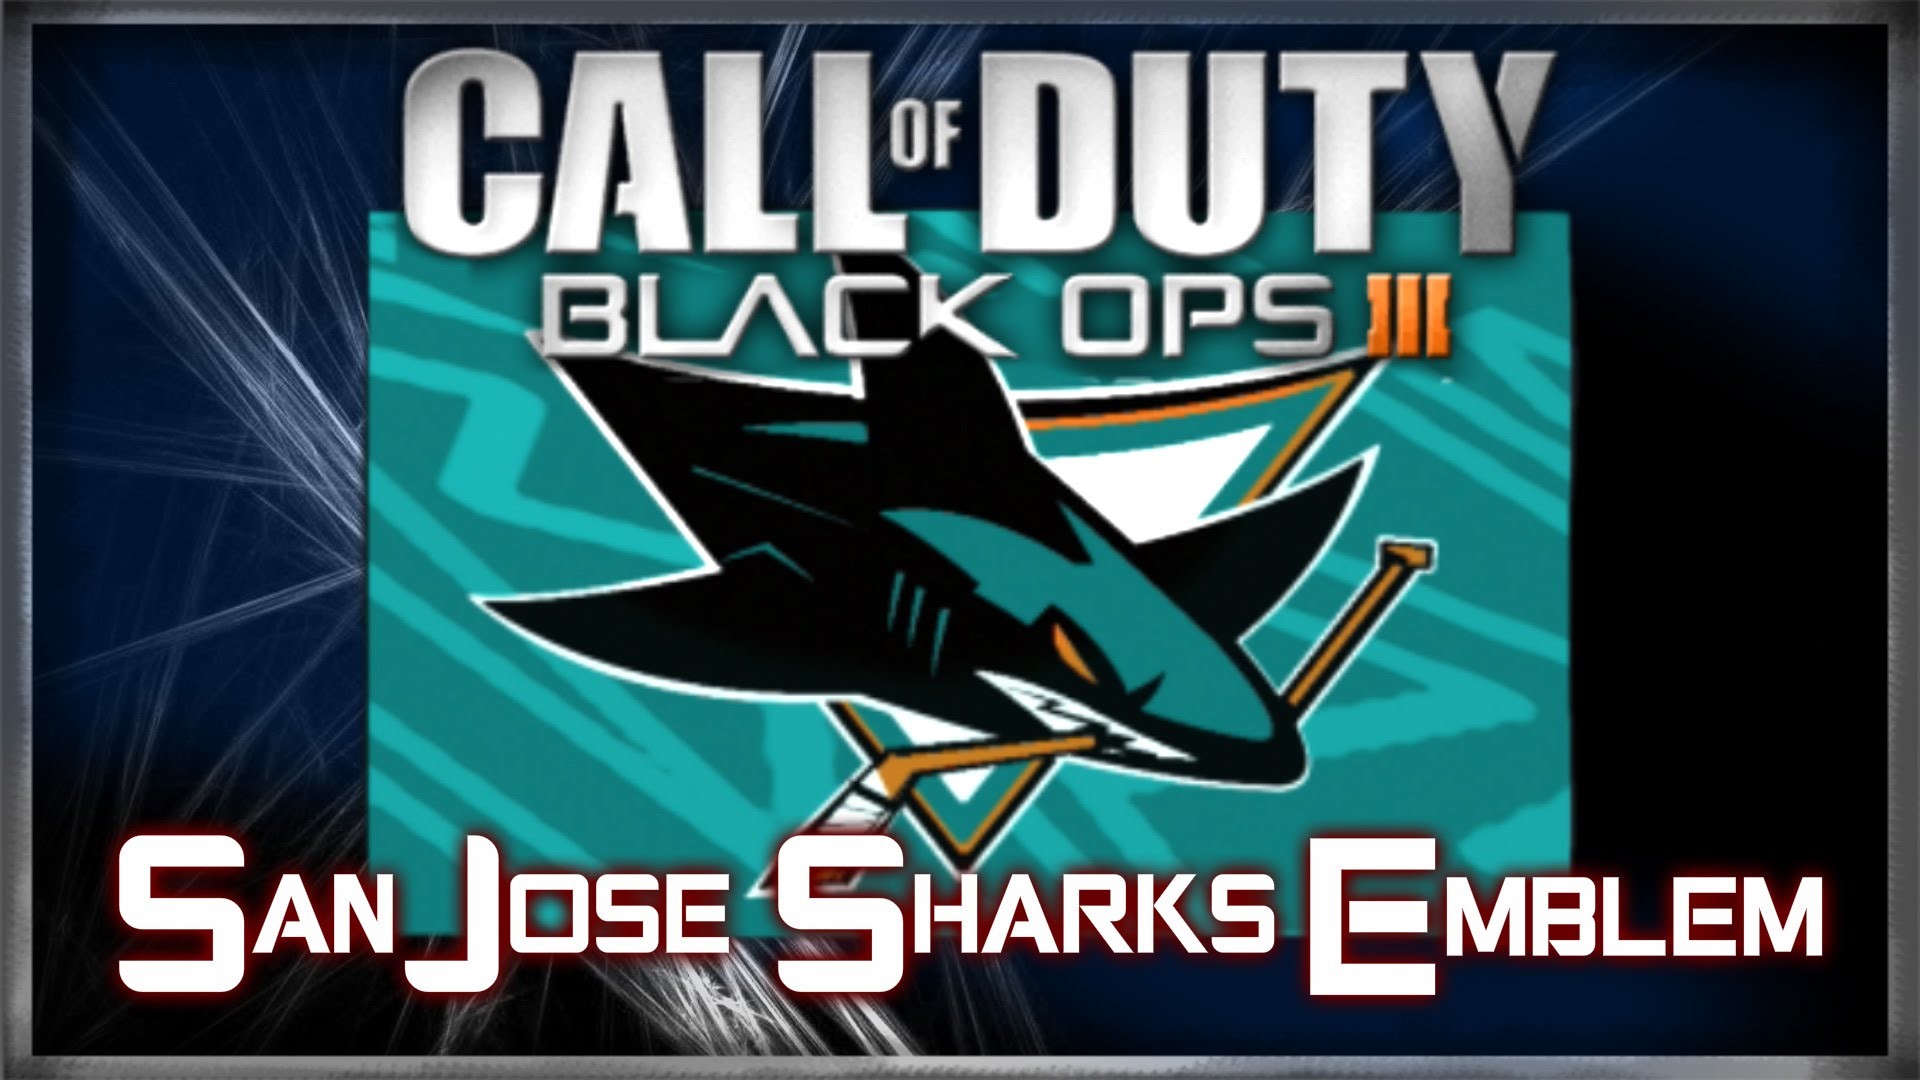 1920x1080 San Jose Sharks (NHL Hockey) - Call of Duty Black Ops 3 Emblem Tutorial |  By A Hooded Psycho - YouTube